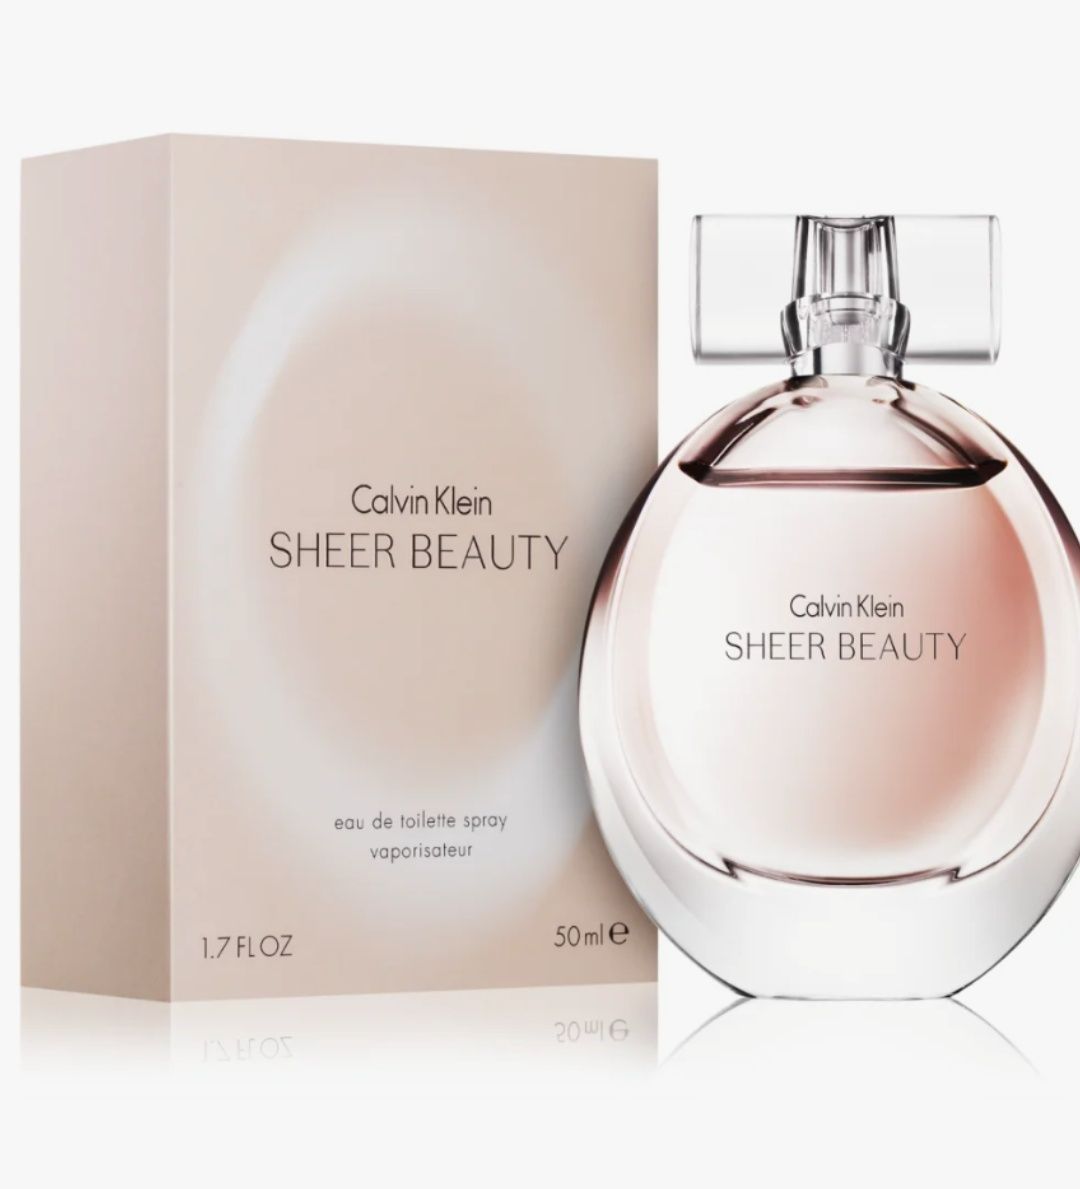 Vand parfum Calvin Klein sheer beauty